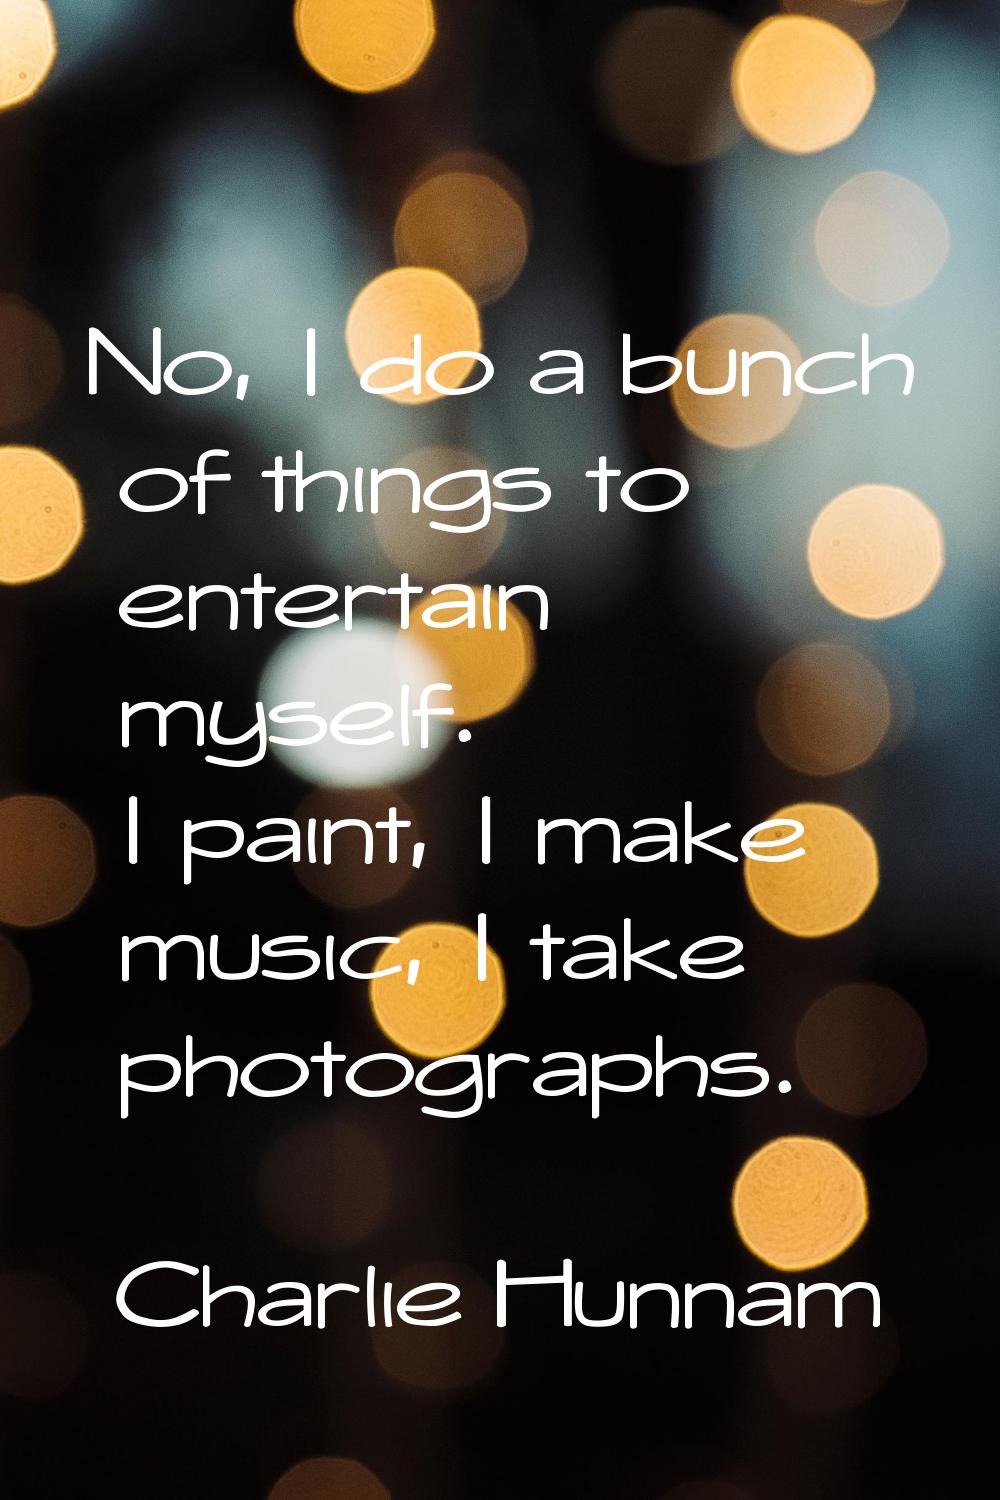 No, I do a bunch of things to entertain myself. I paint, I make music, I take photographs.